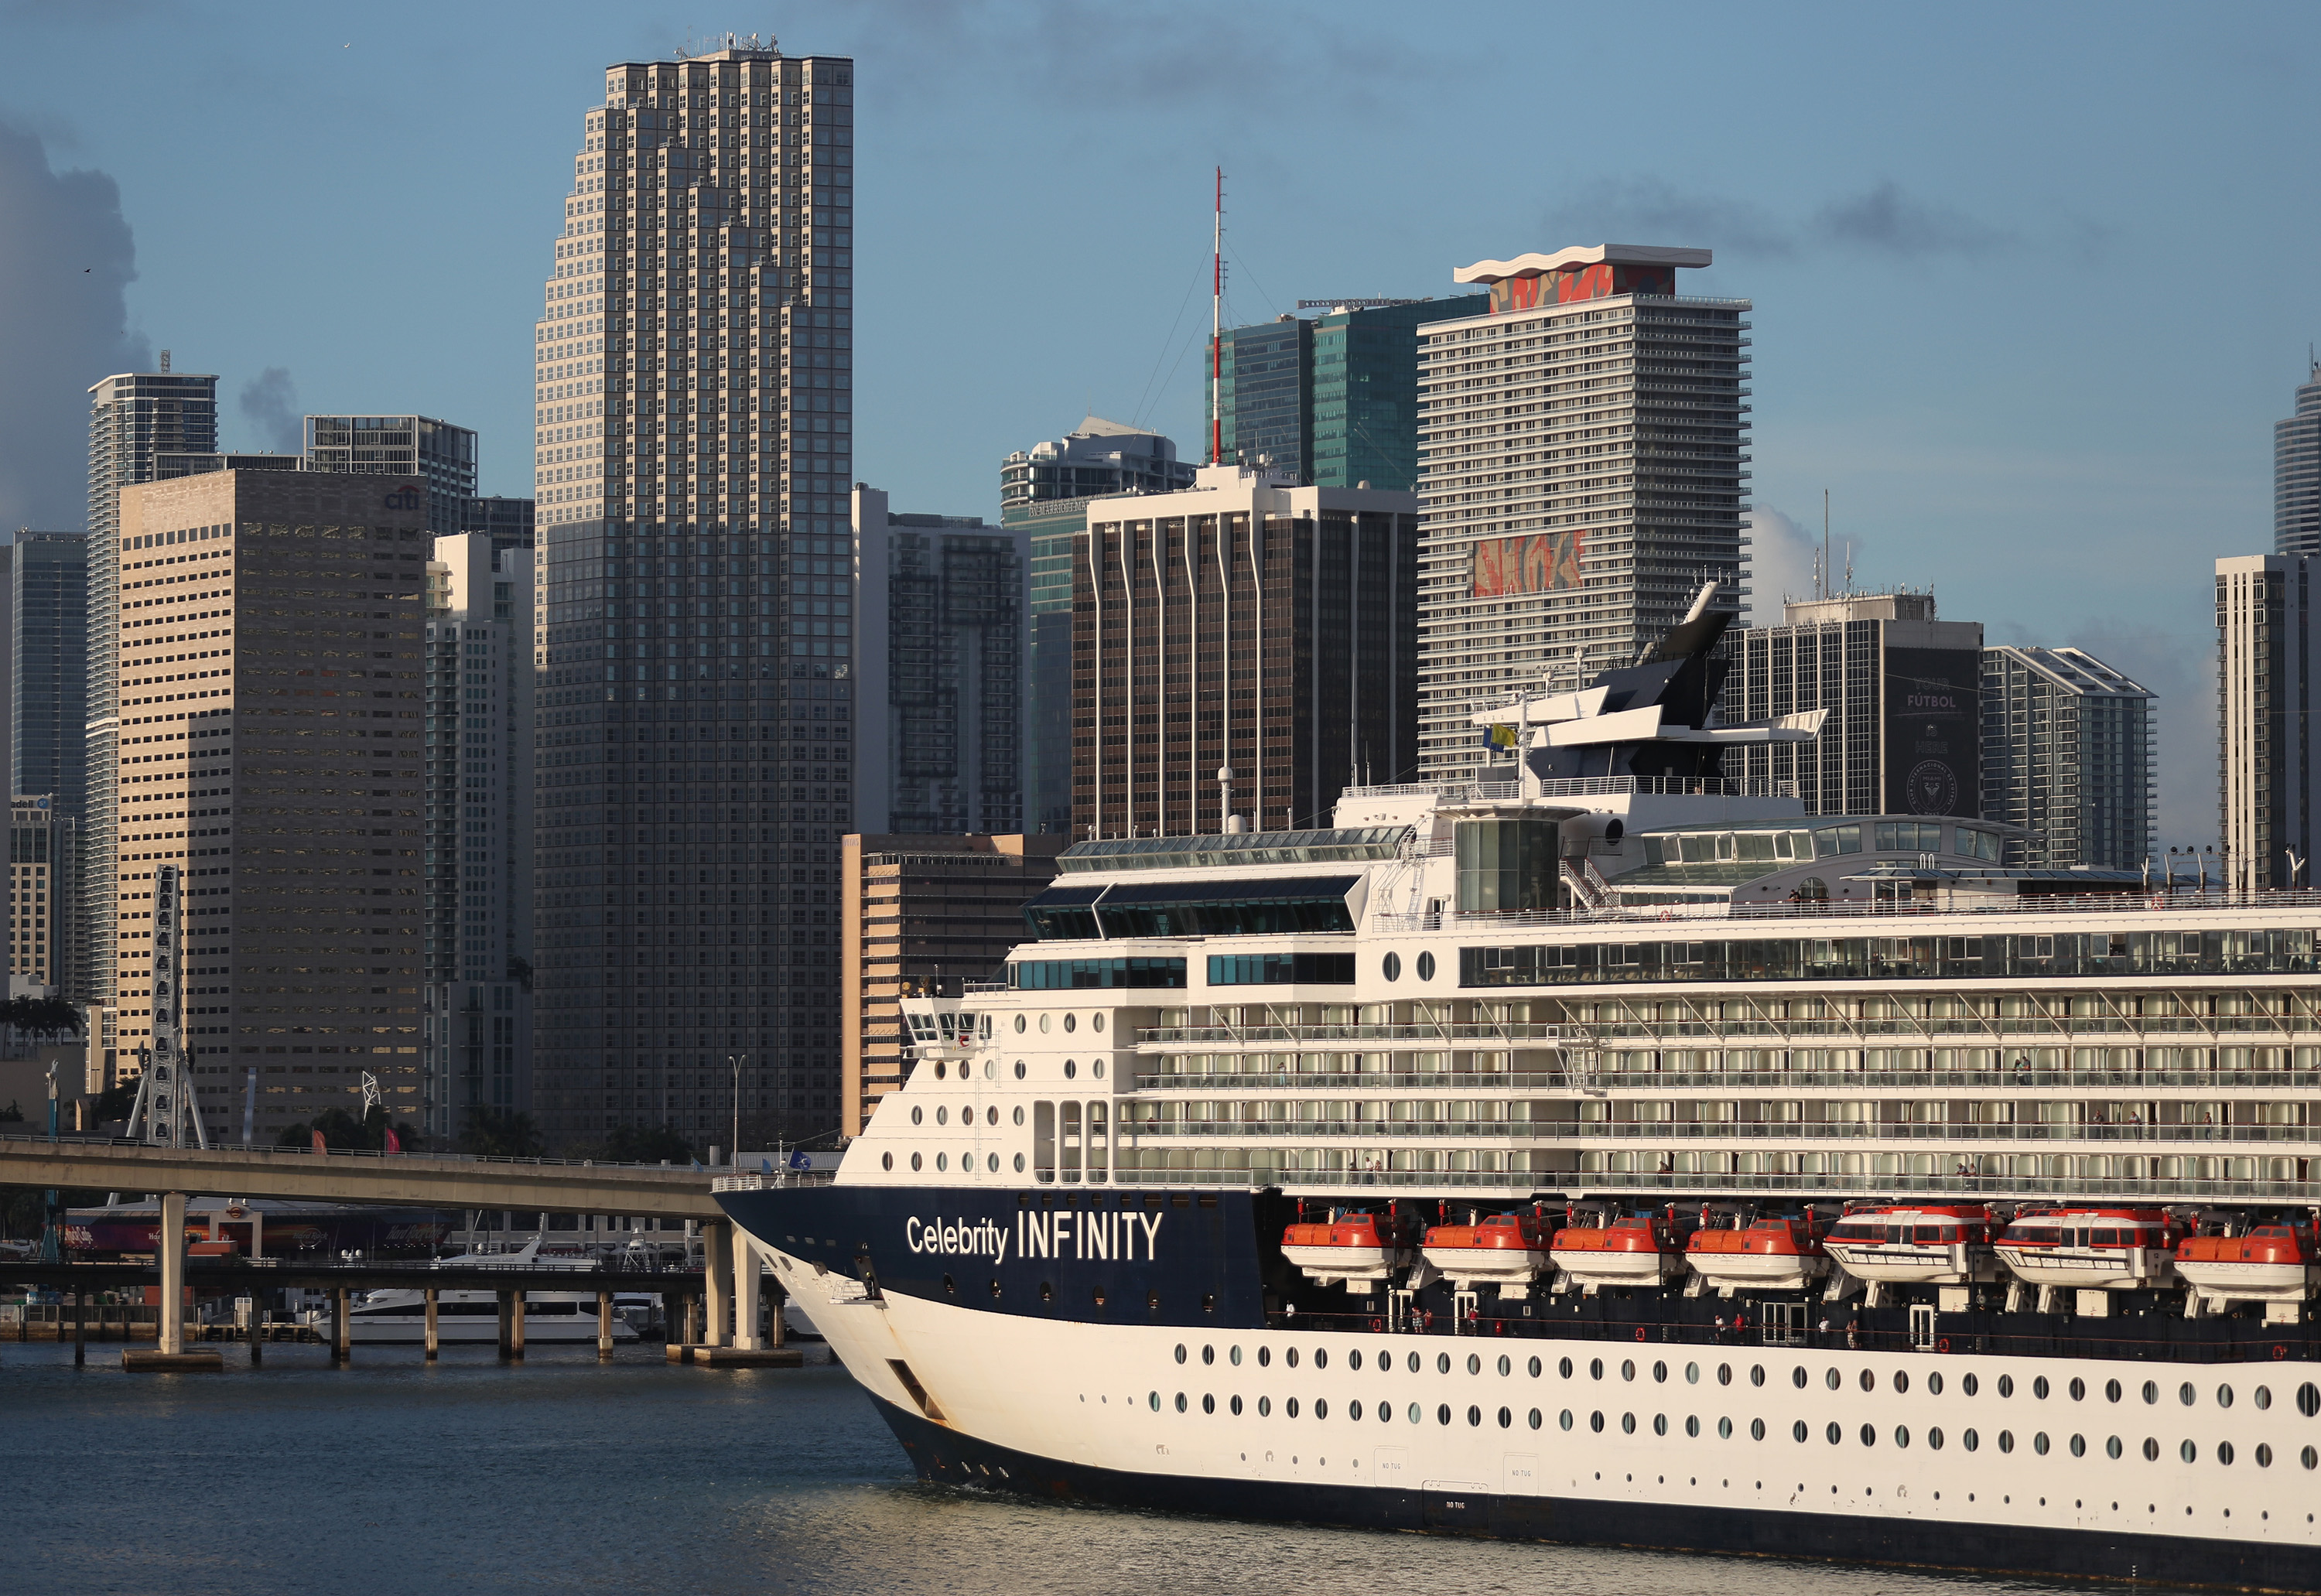 The Celebrity Infinity Cruise ship returns to PortMiami on March 14 in Miami, Florida.